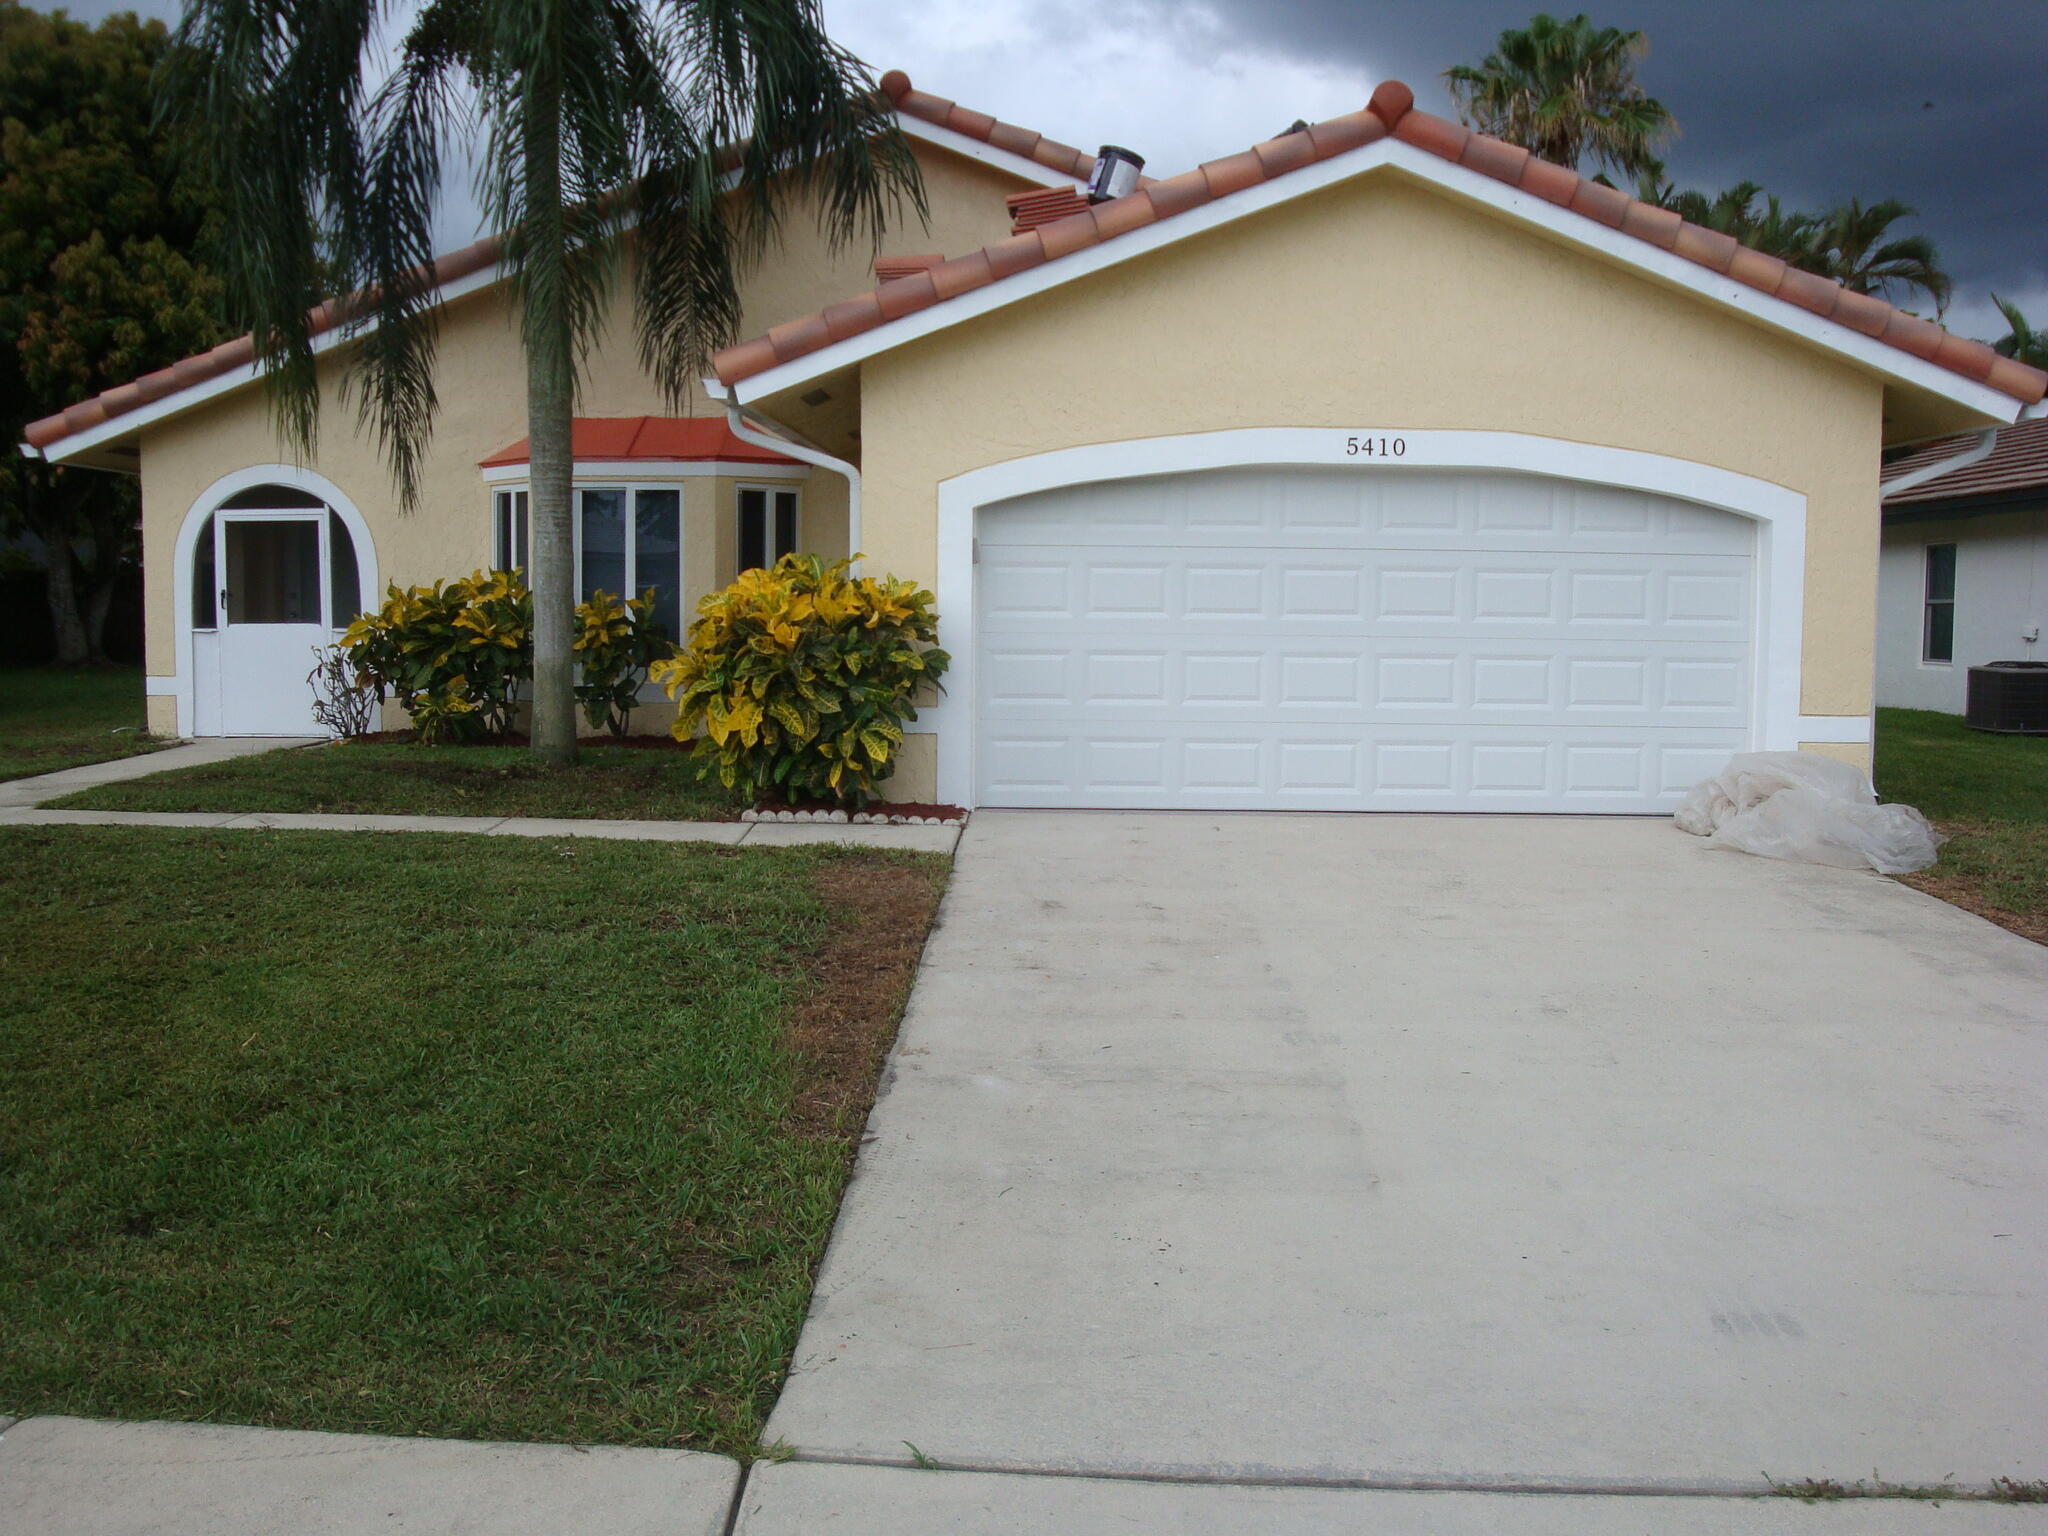 Property for Sale at 5410 Jason Court, Boynton Beach, Palm Beach County, Florida - Bedrooms: 3 
Bathrooms: 2  - $555,000